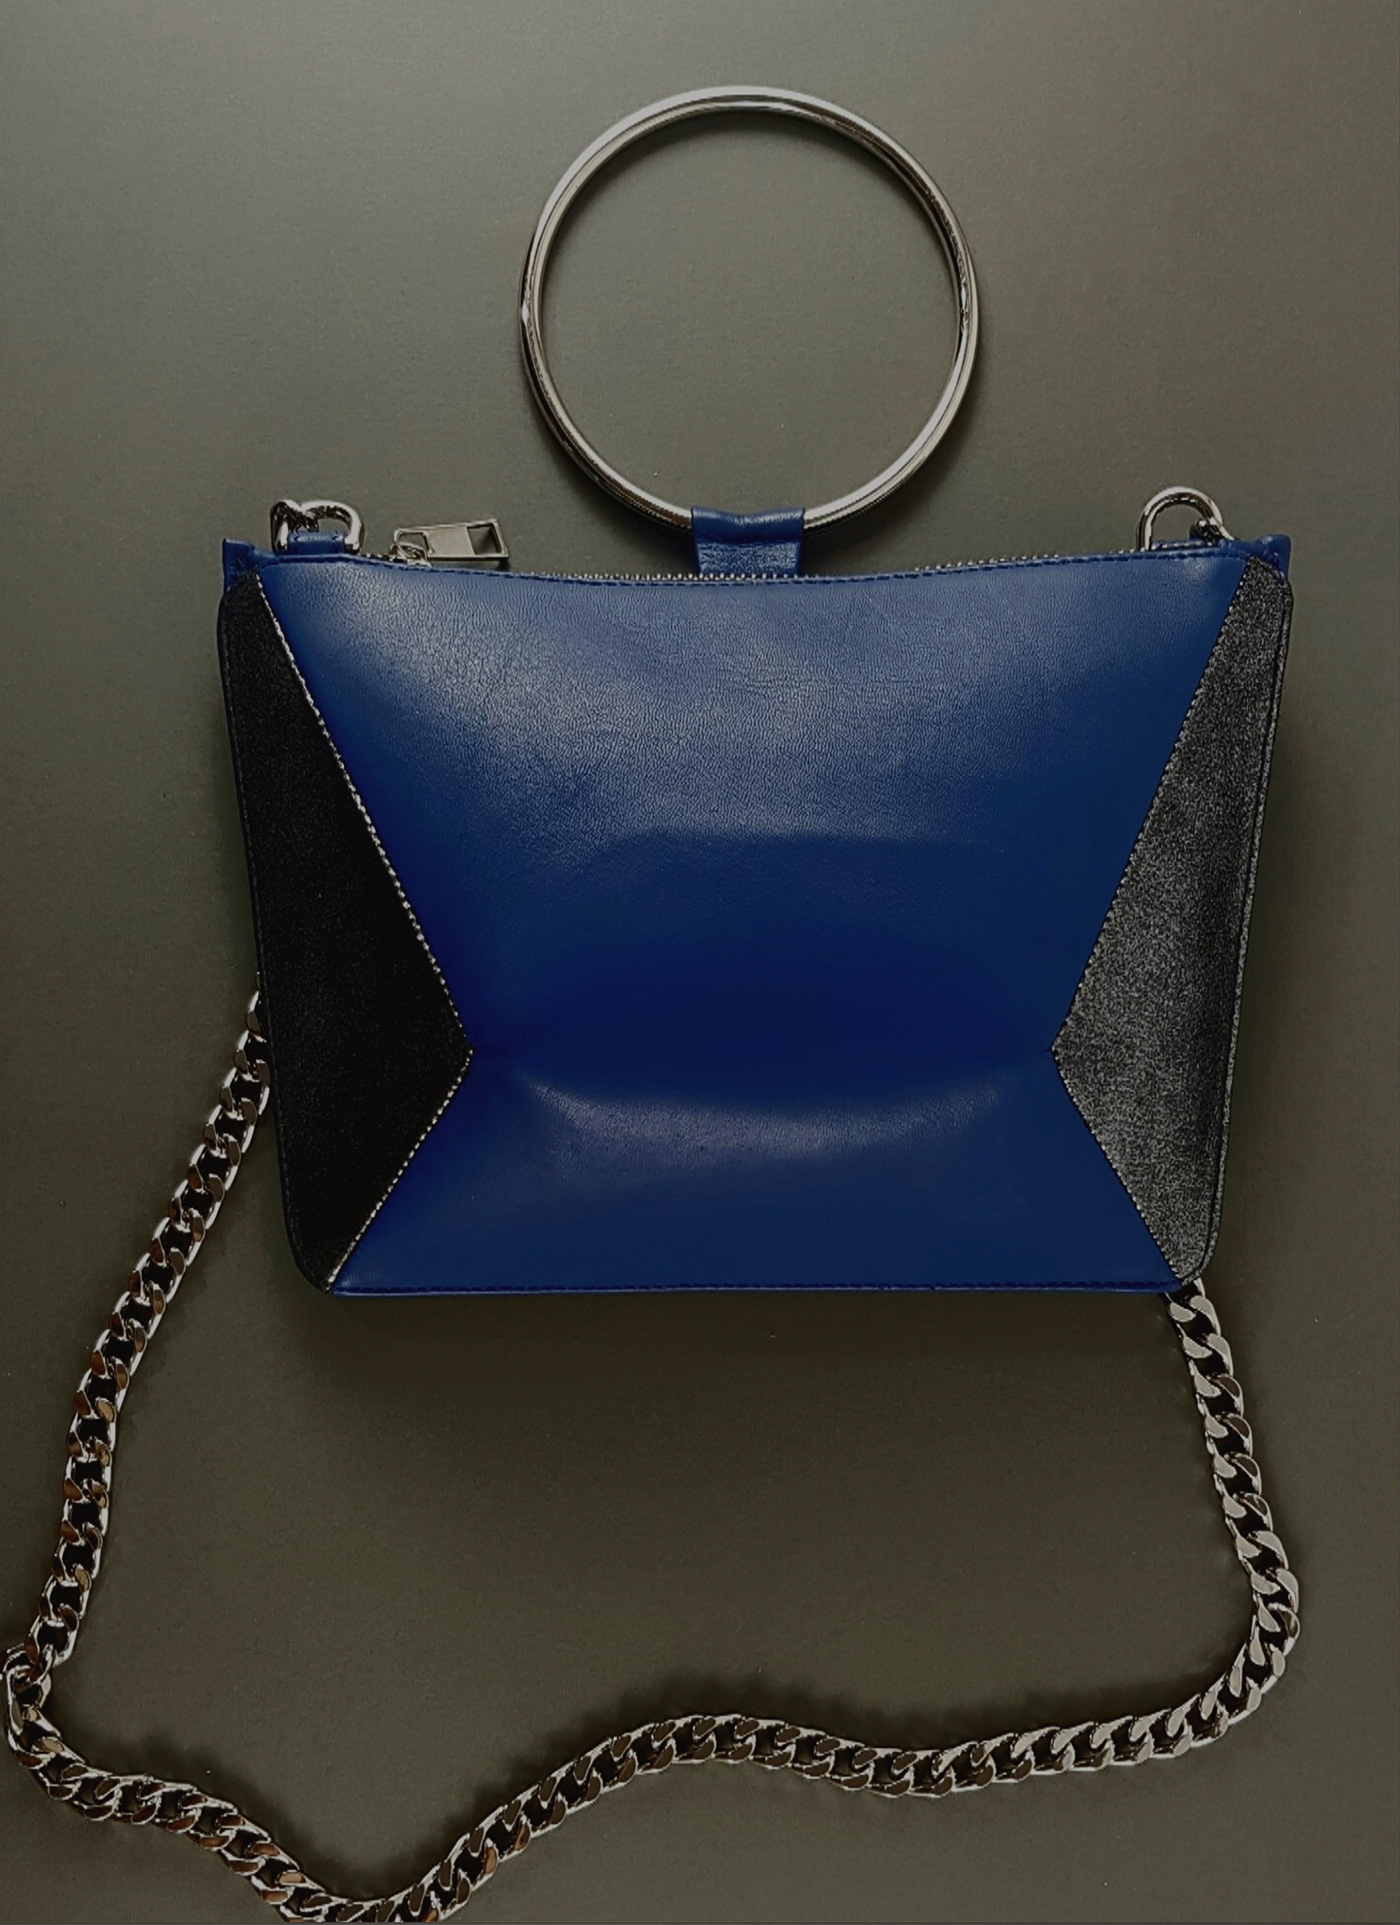 accessory design Handbag Design leather design